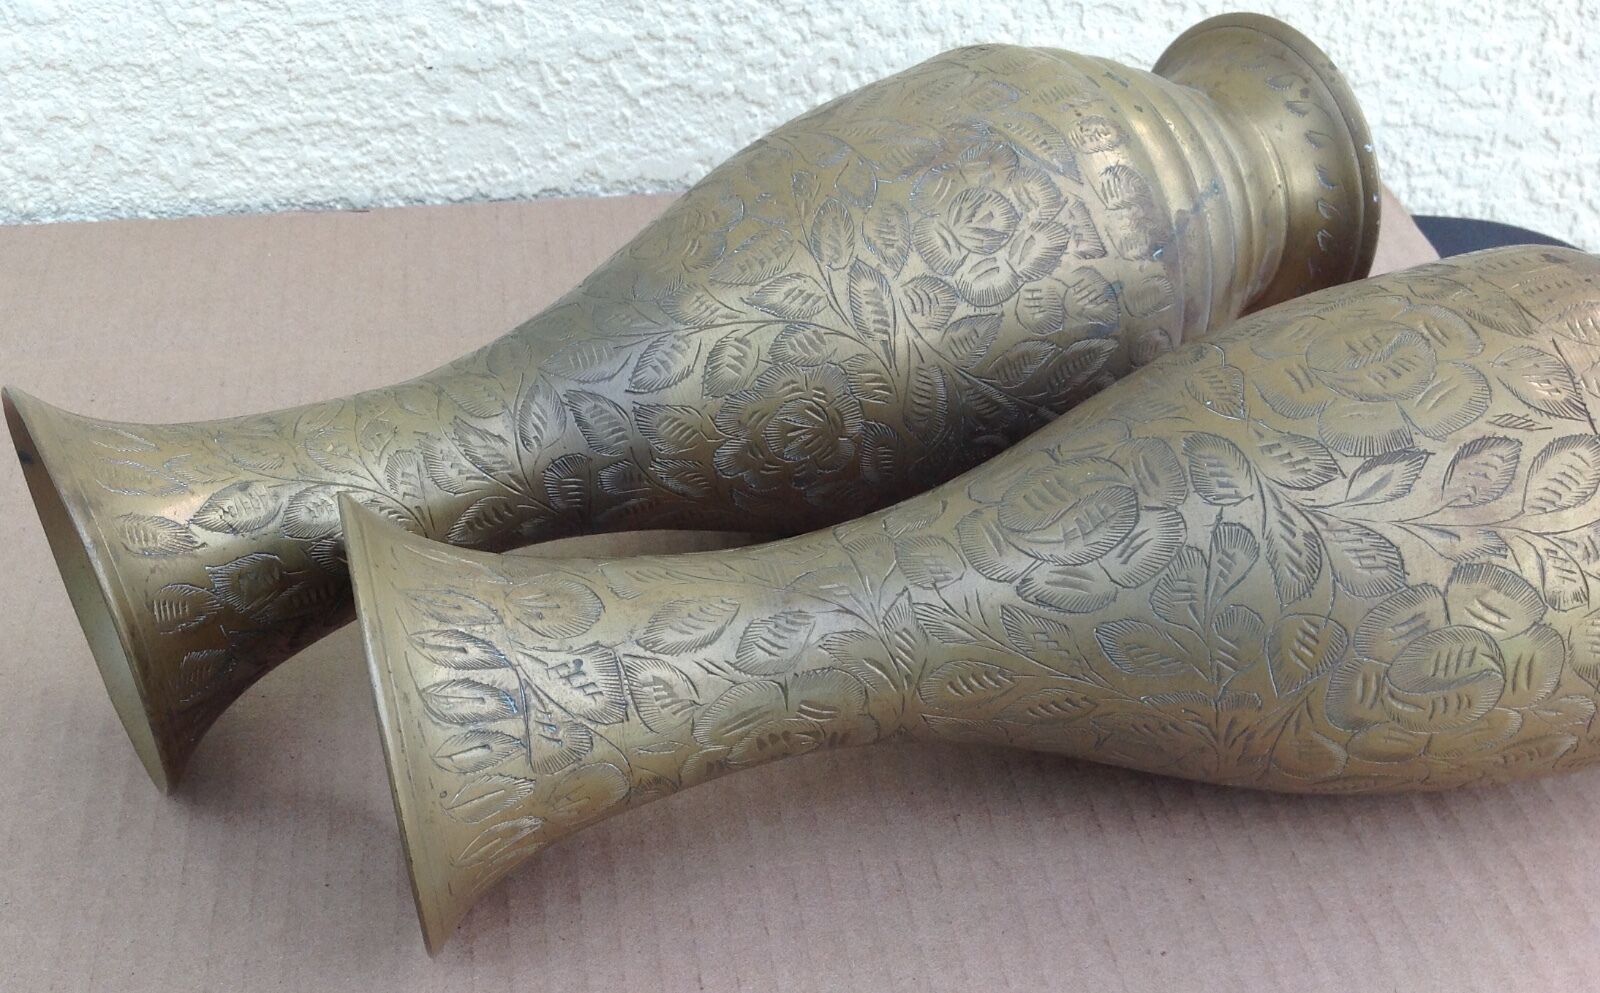 Brass India Vase pair identical, 20th century Anglo, engraved bohemian 225-BF  Без бренда - фотография #11